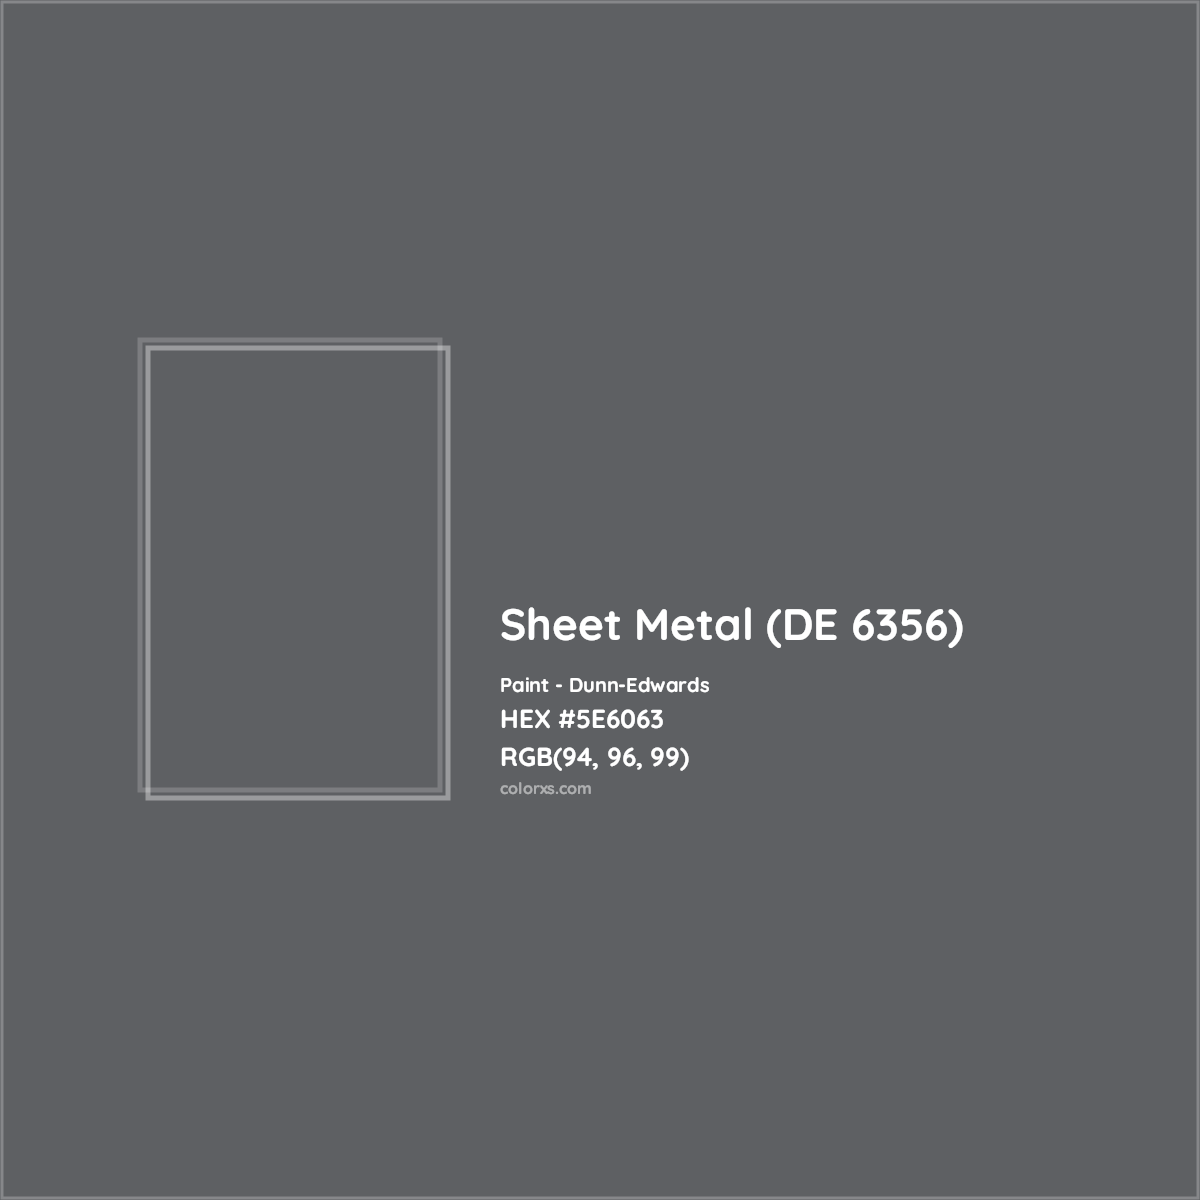 HEX #5E6063 Sheet Metal (DE 6356) Paint Dunn-Edwards - Color Code